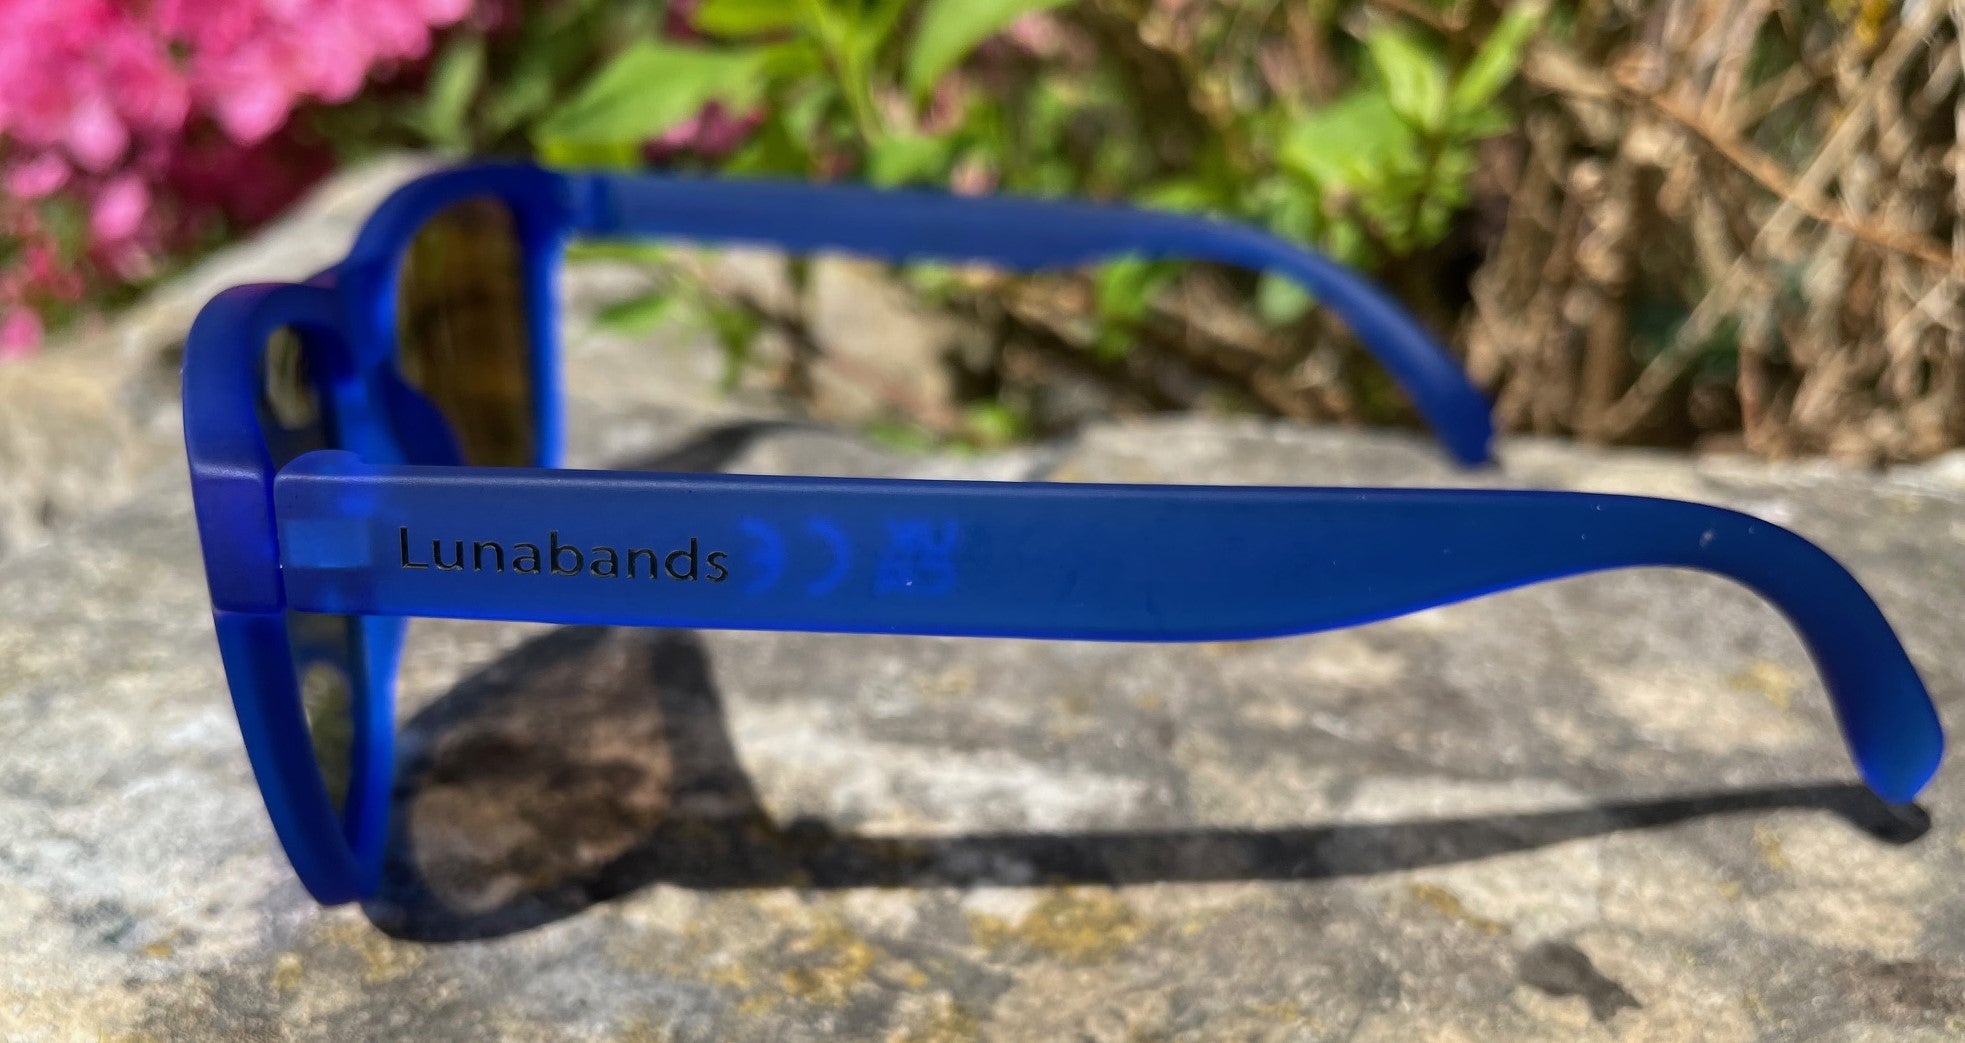 Lunabands Polarised No Bounce Active Hiking Cycling Marathon Running Sunglasses